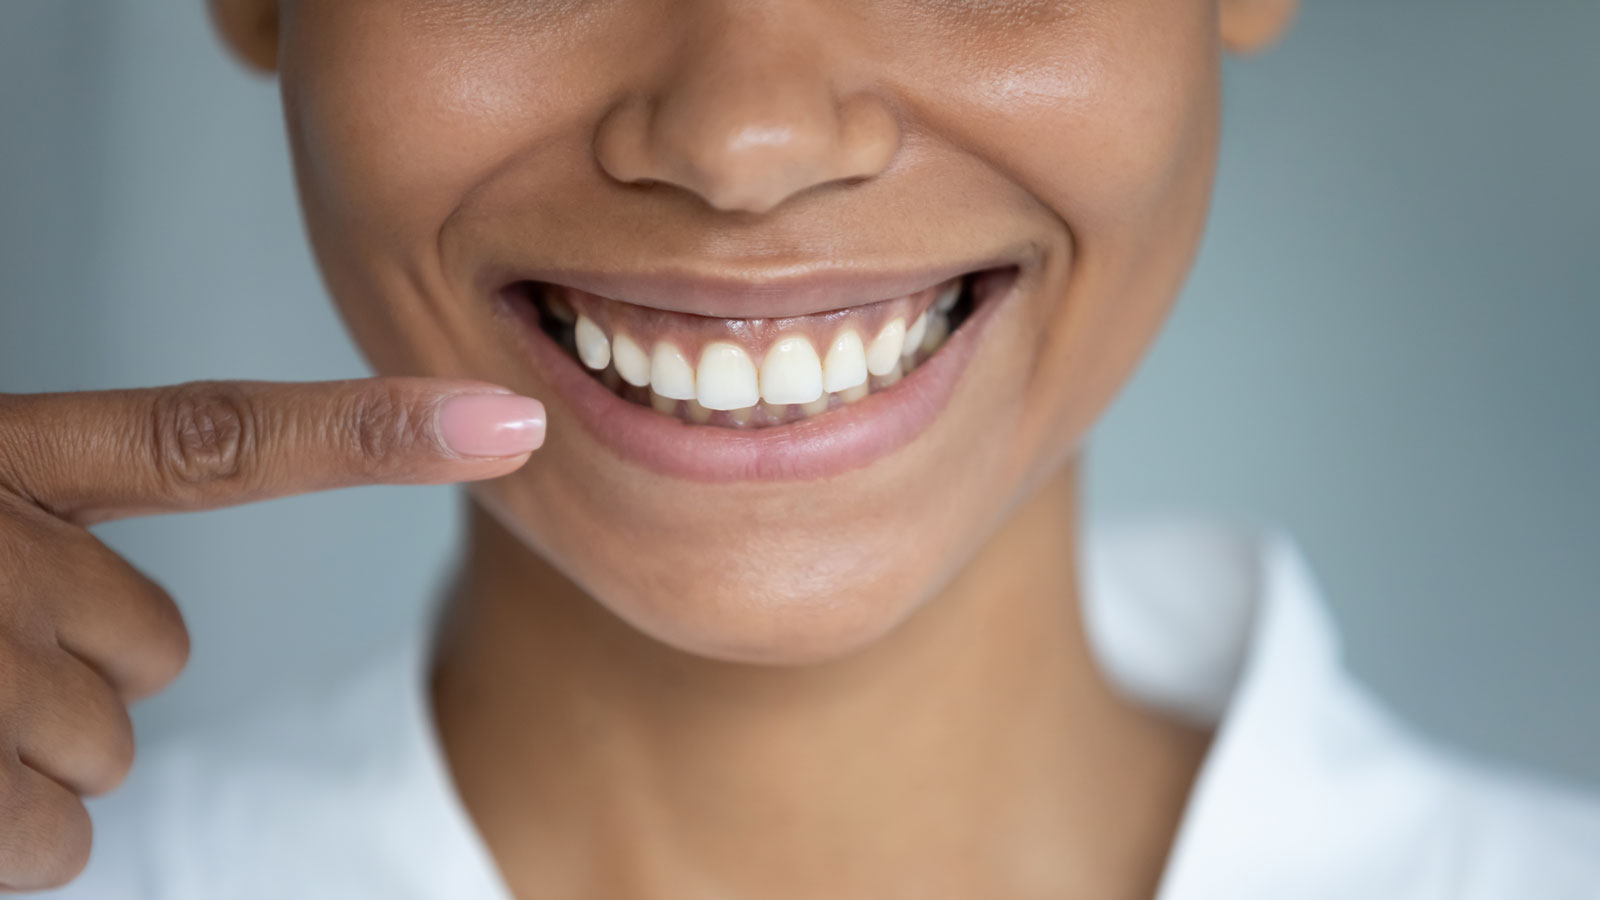 Gum Disease: A "Sneaky" Yet Preventable Health Issue At Burke Dental